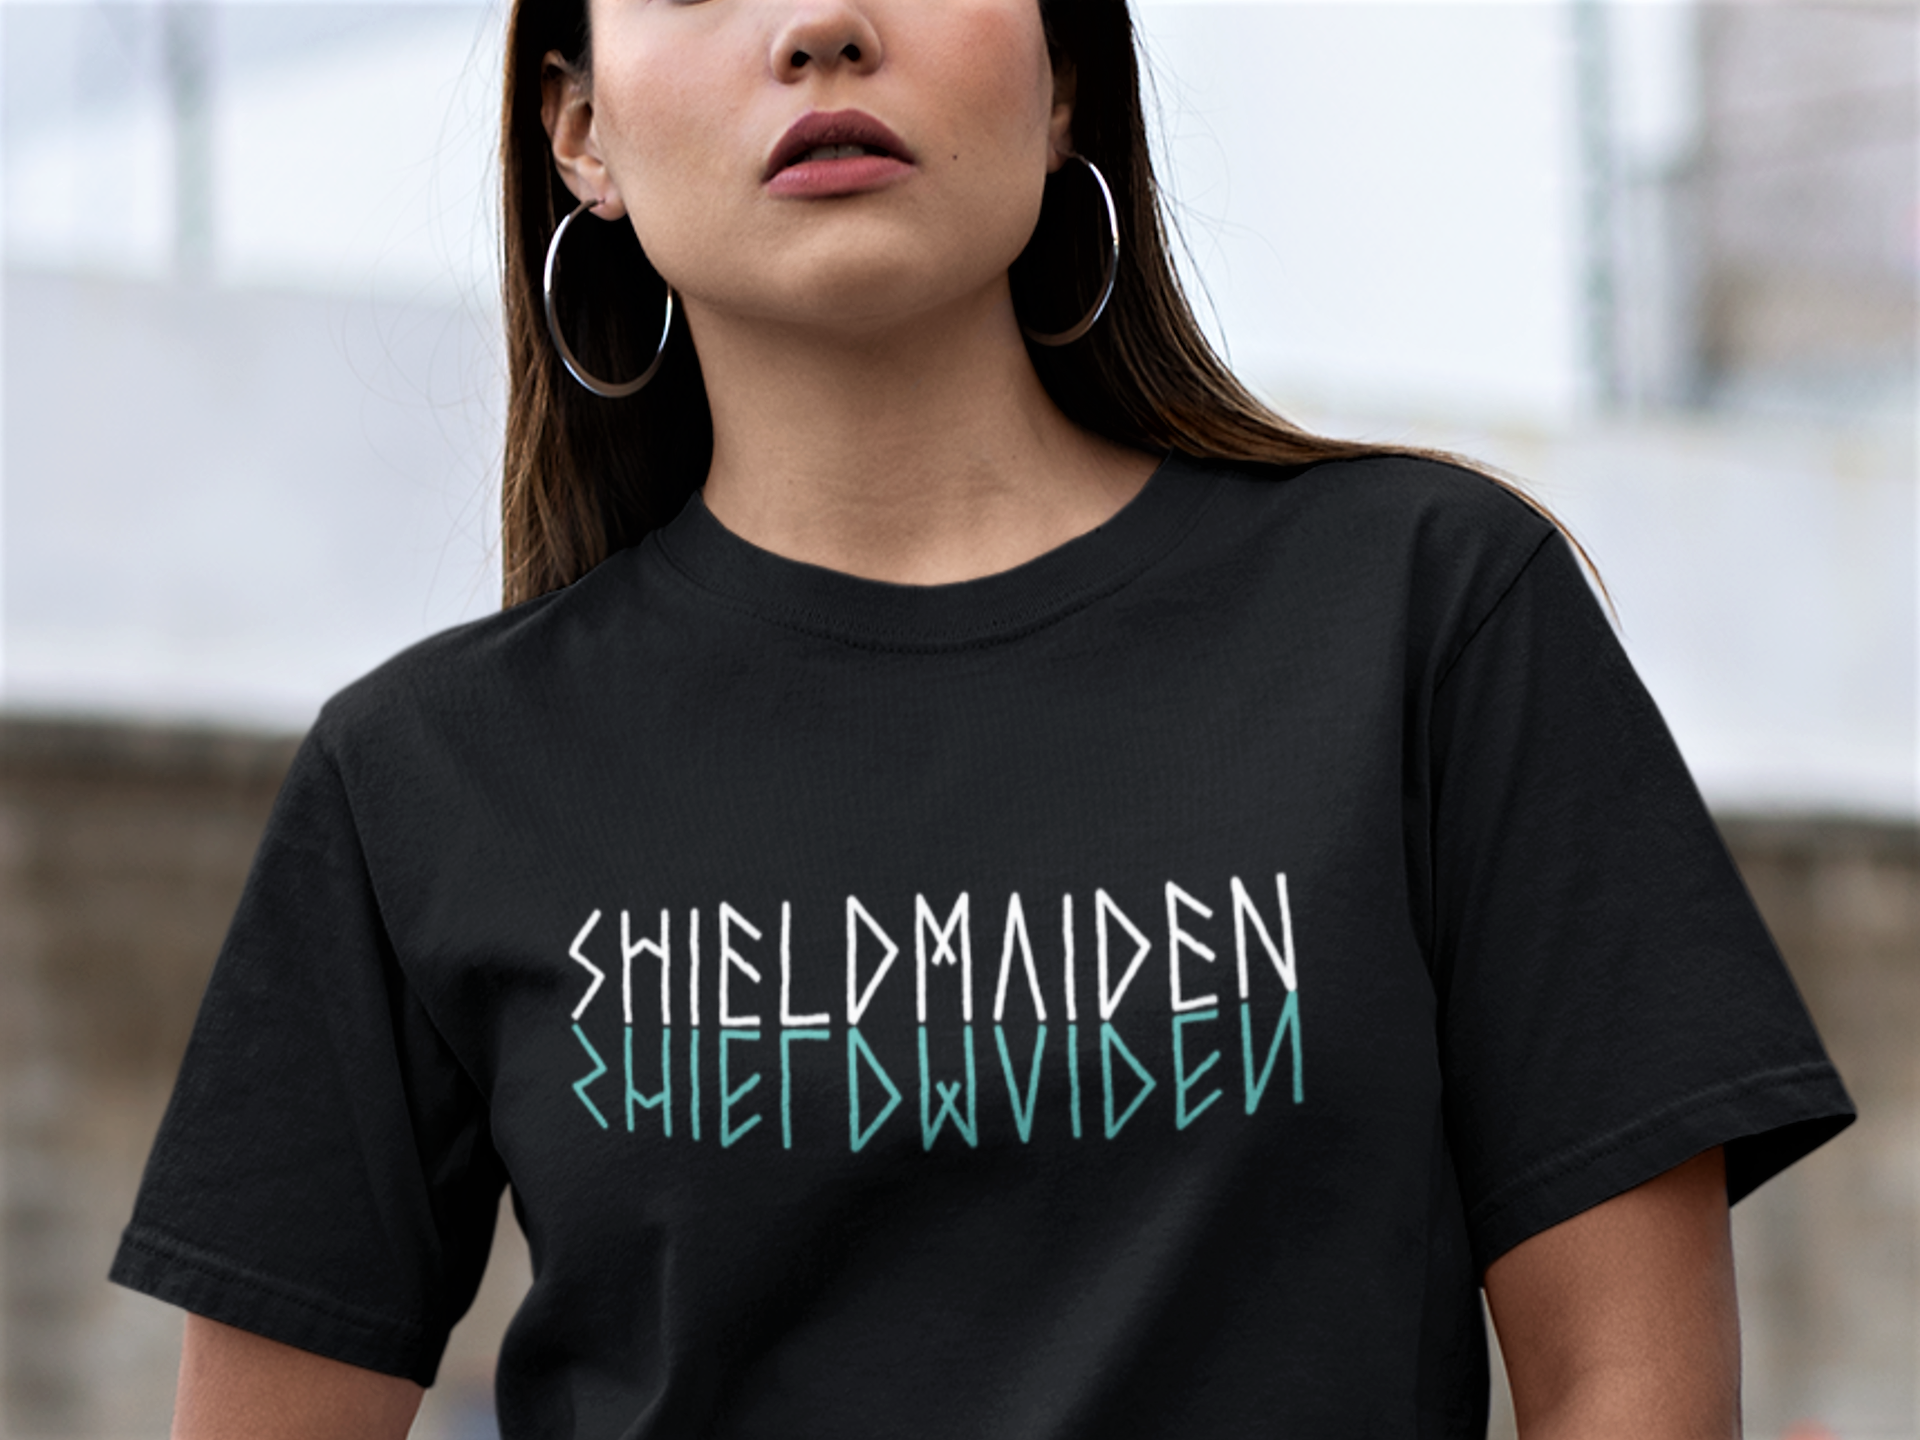 No Maidens Shirt, Famous Shield Maidens T Shirt, No Maidens